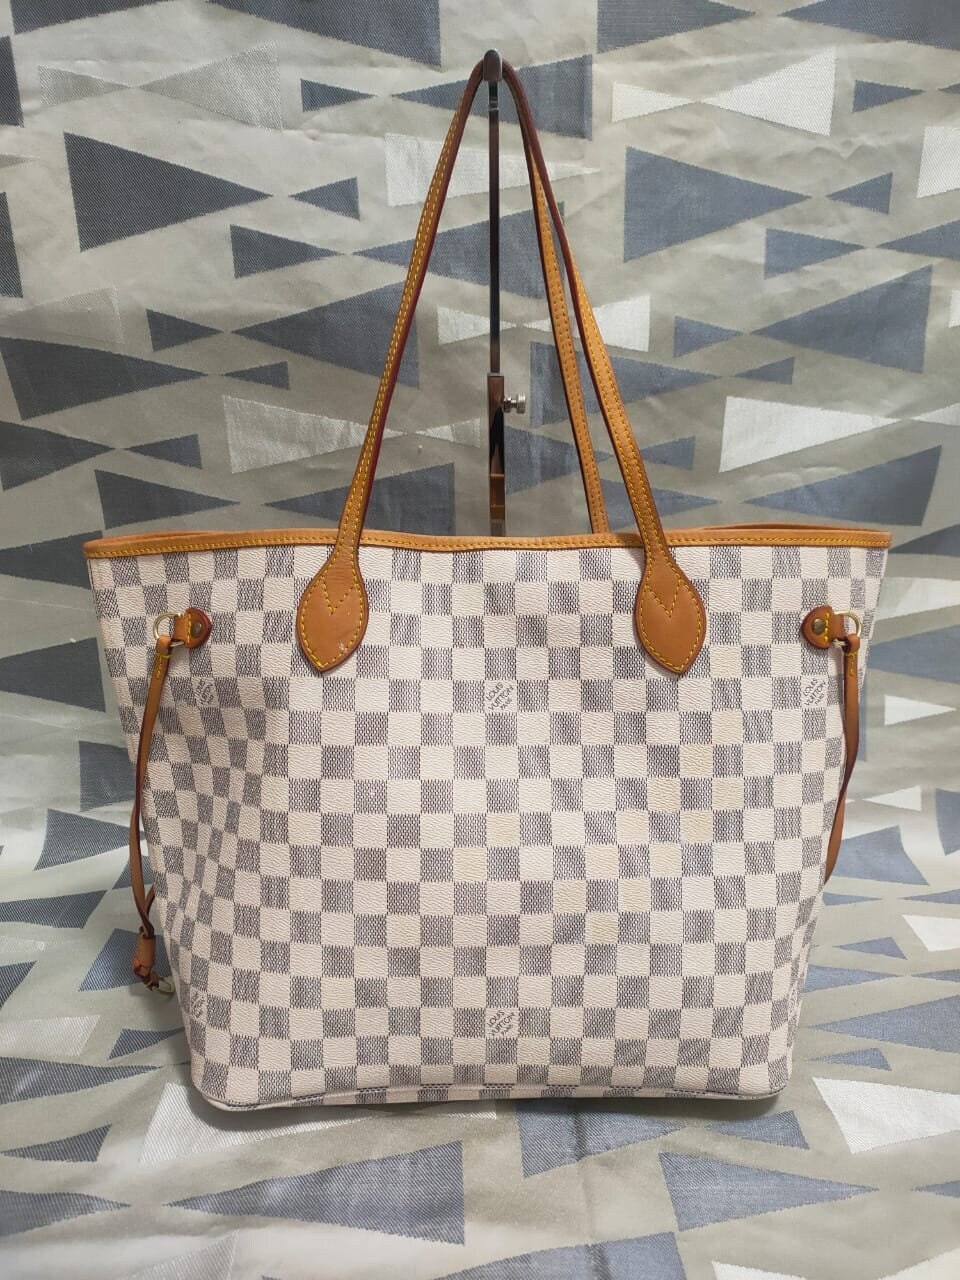 Louis Vuitton Neverfull Mm used Bag/vintage Item 